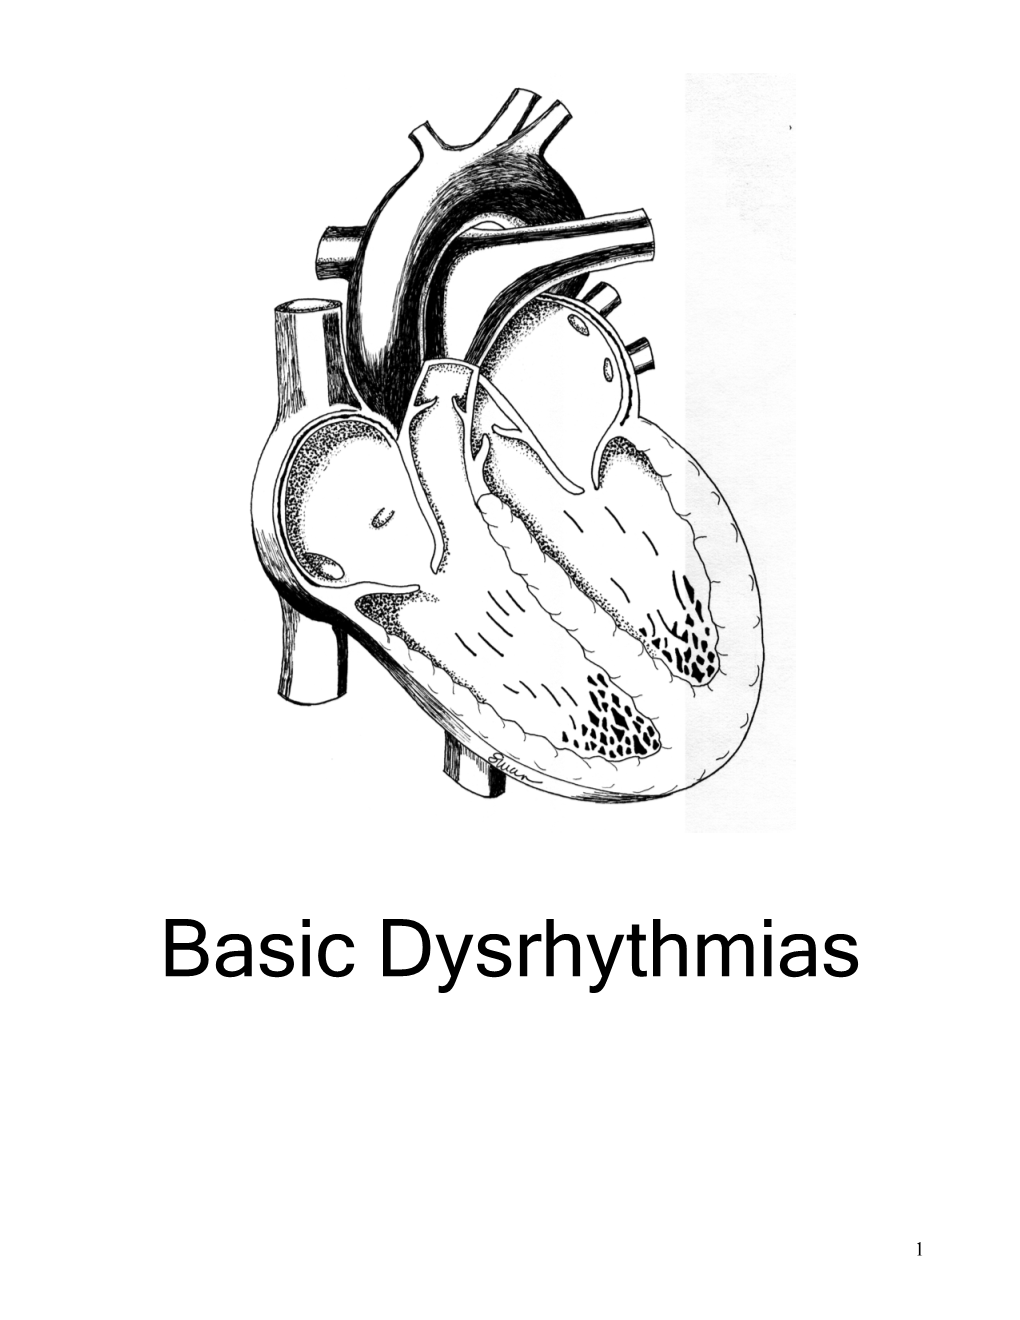 Basic Dysrhythmias